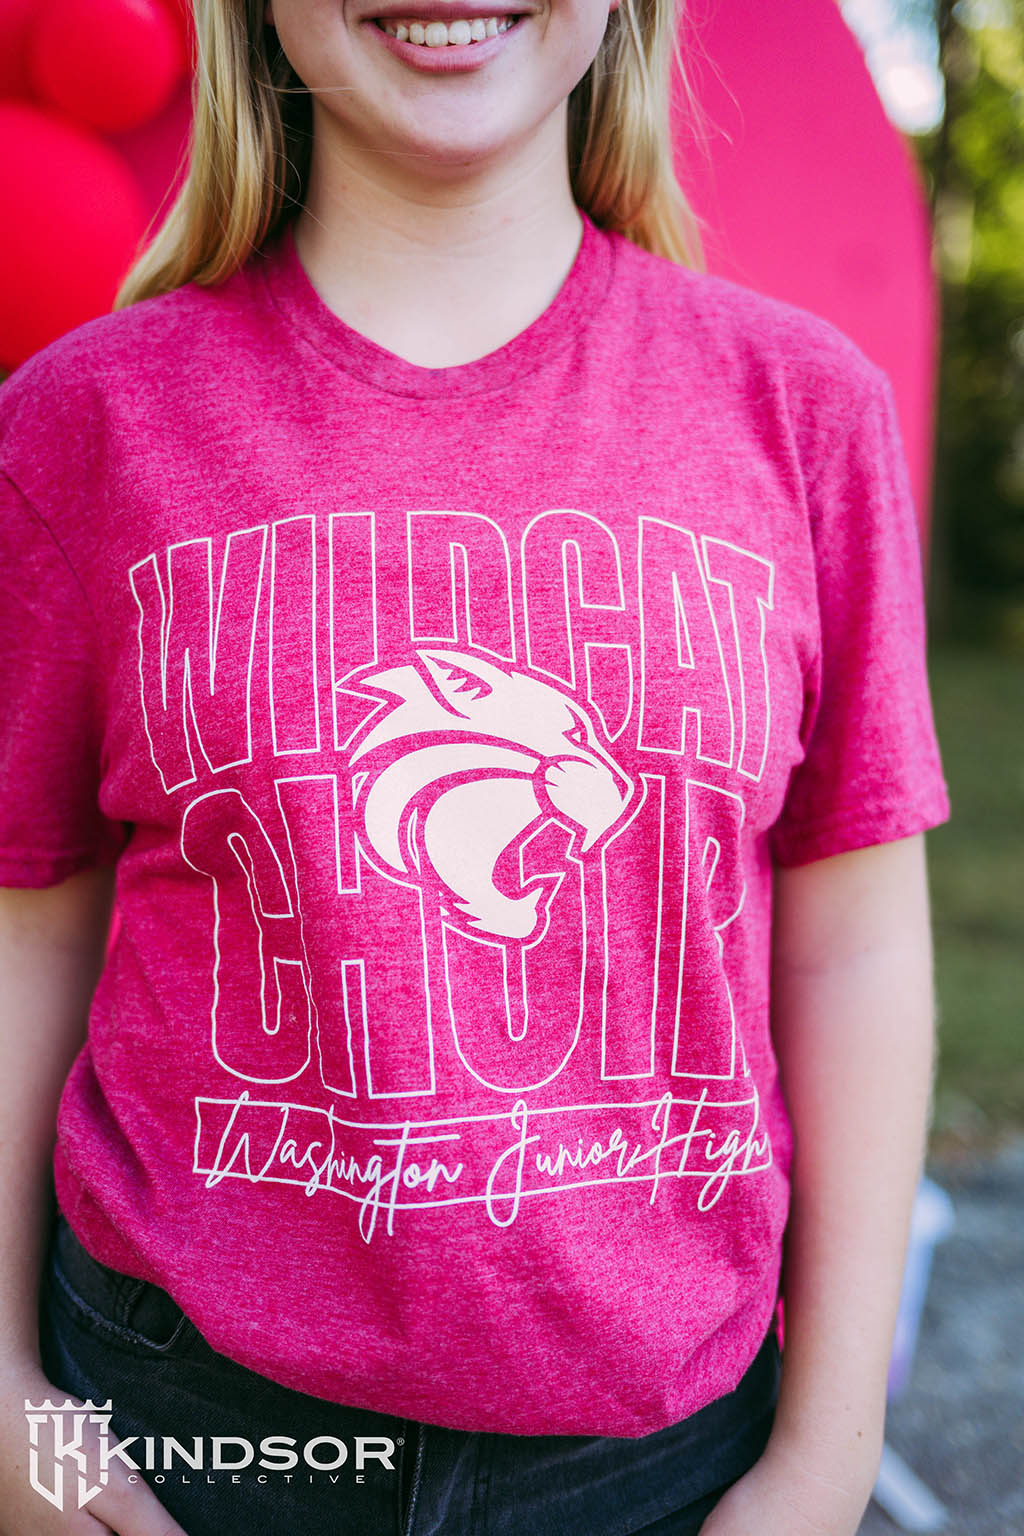 Washington Junior High Wildcat Choir Tshirt